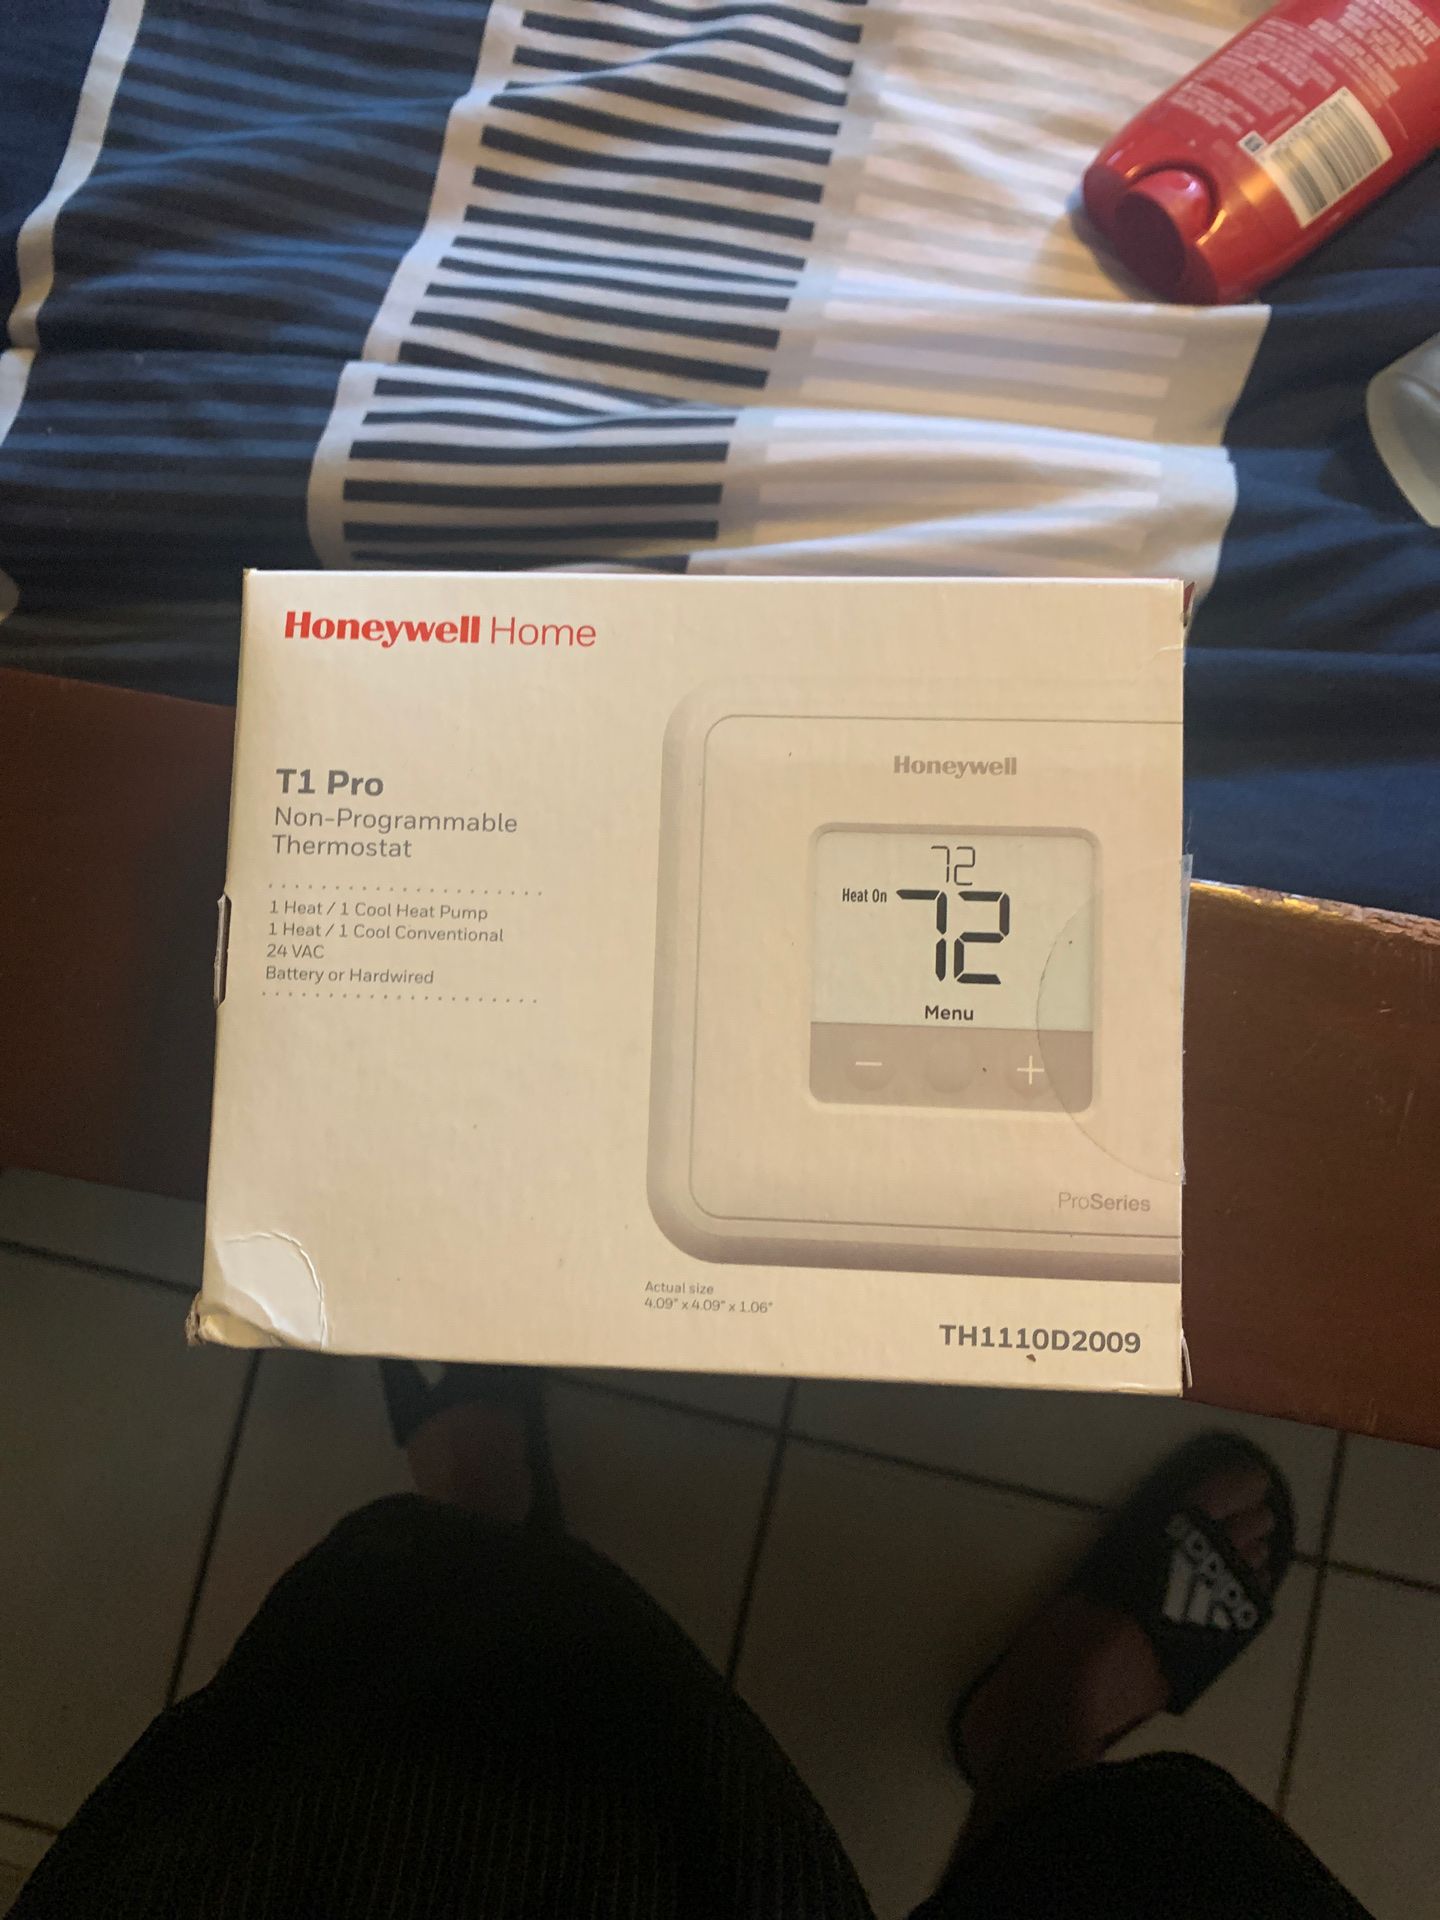 Brand new digital thermostat